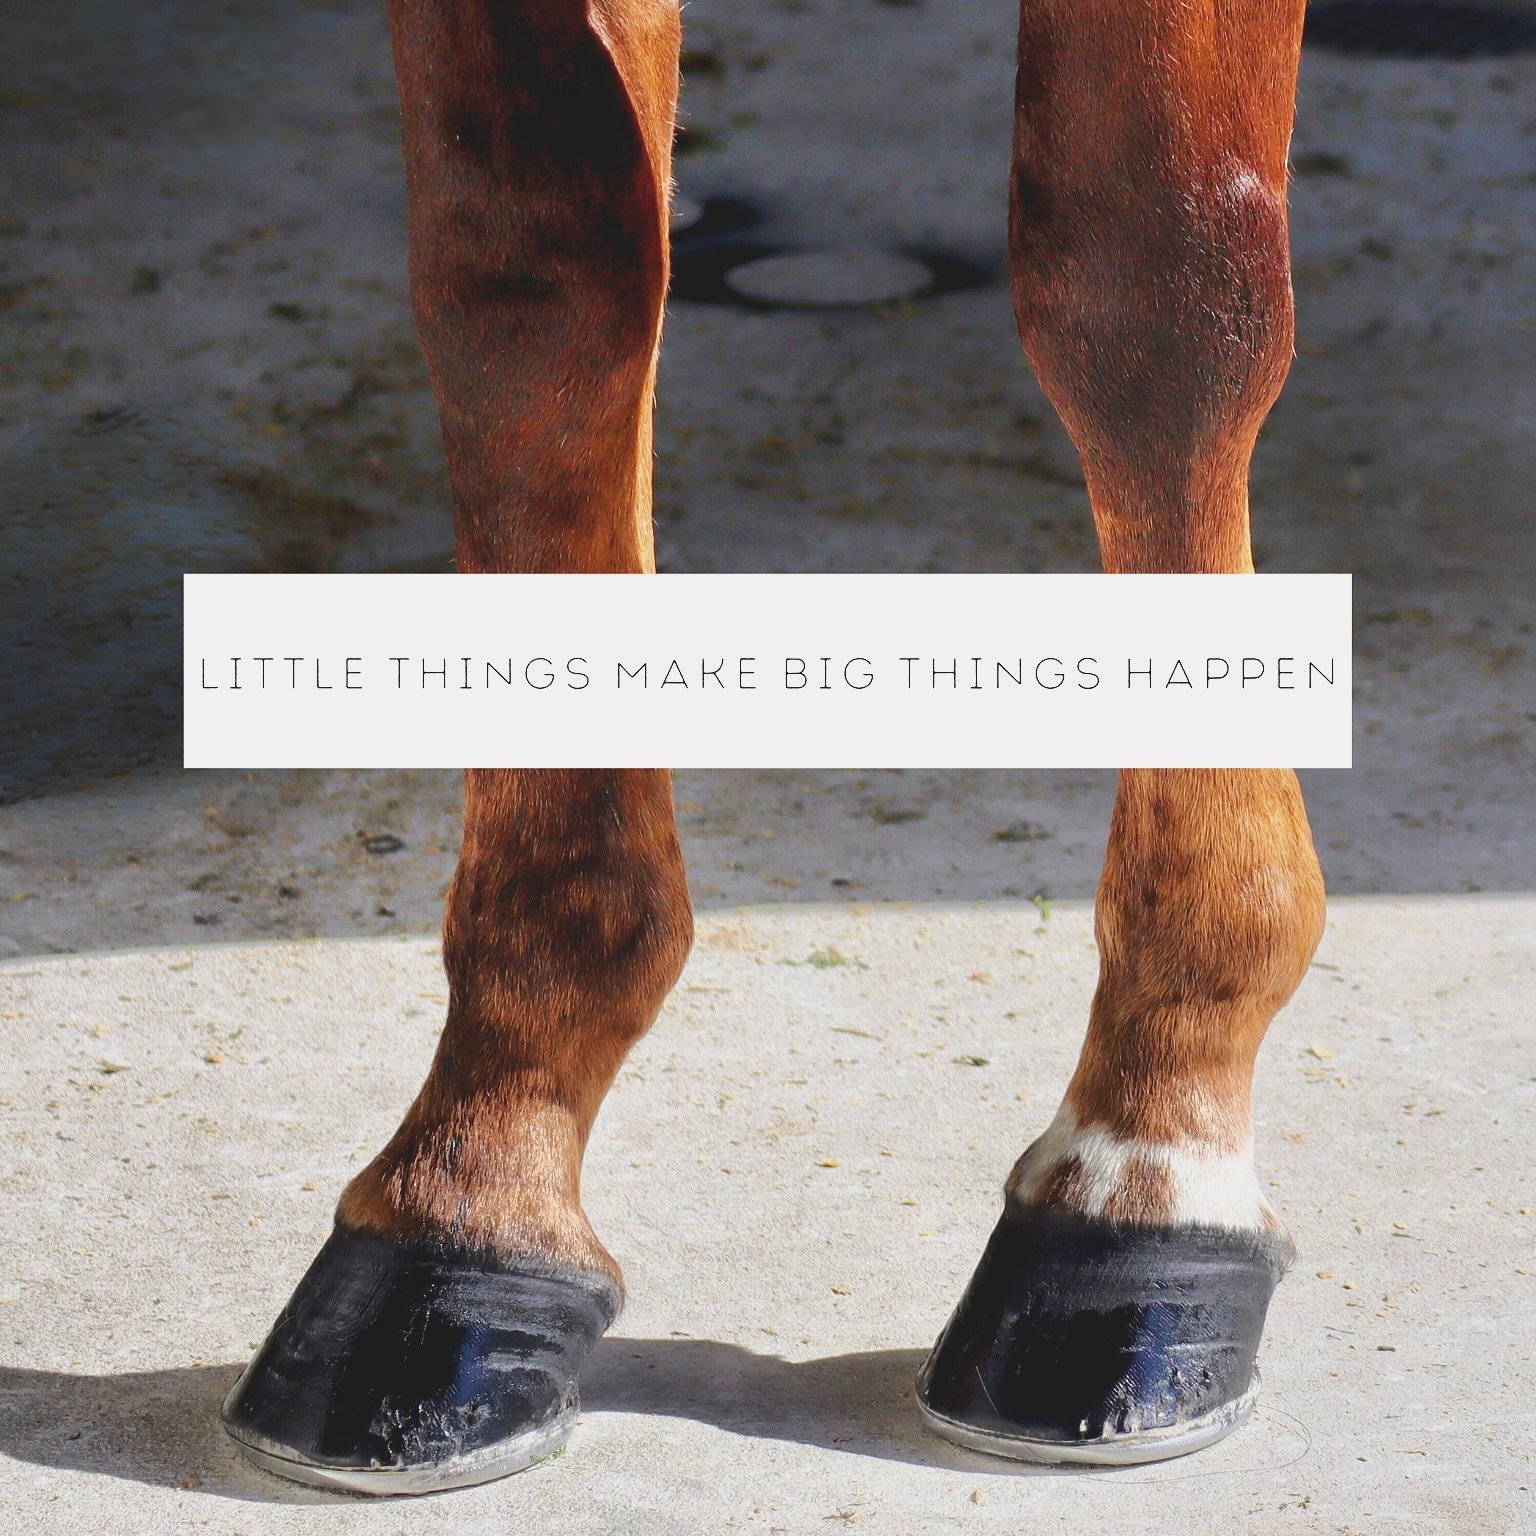 🤎🤍🖤
.
.
.
#horses #showhorses #positivevibes #feelgoodfriday #horseshow #texas #sanmarcostexas #littlethings #quarterhorse #horsesofinstagram #horseriding #equestrian #horselife #quotes #aqhaproud #horselove #dukewilliamsperformancehorses